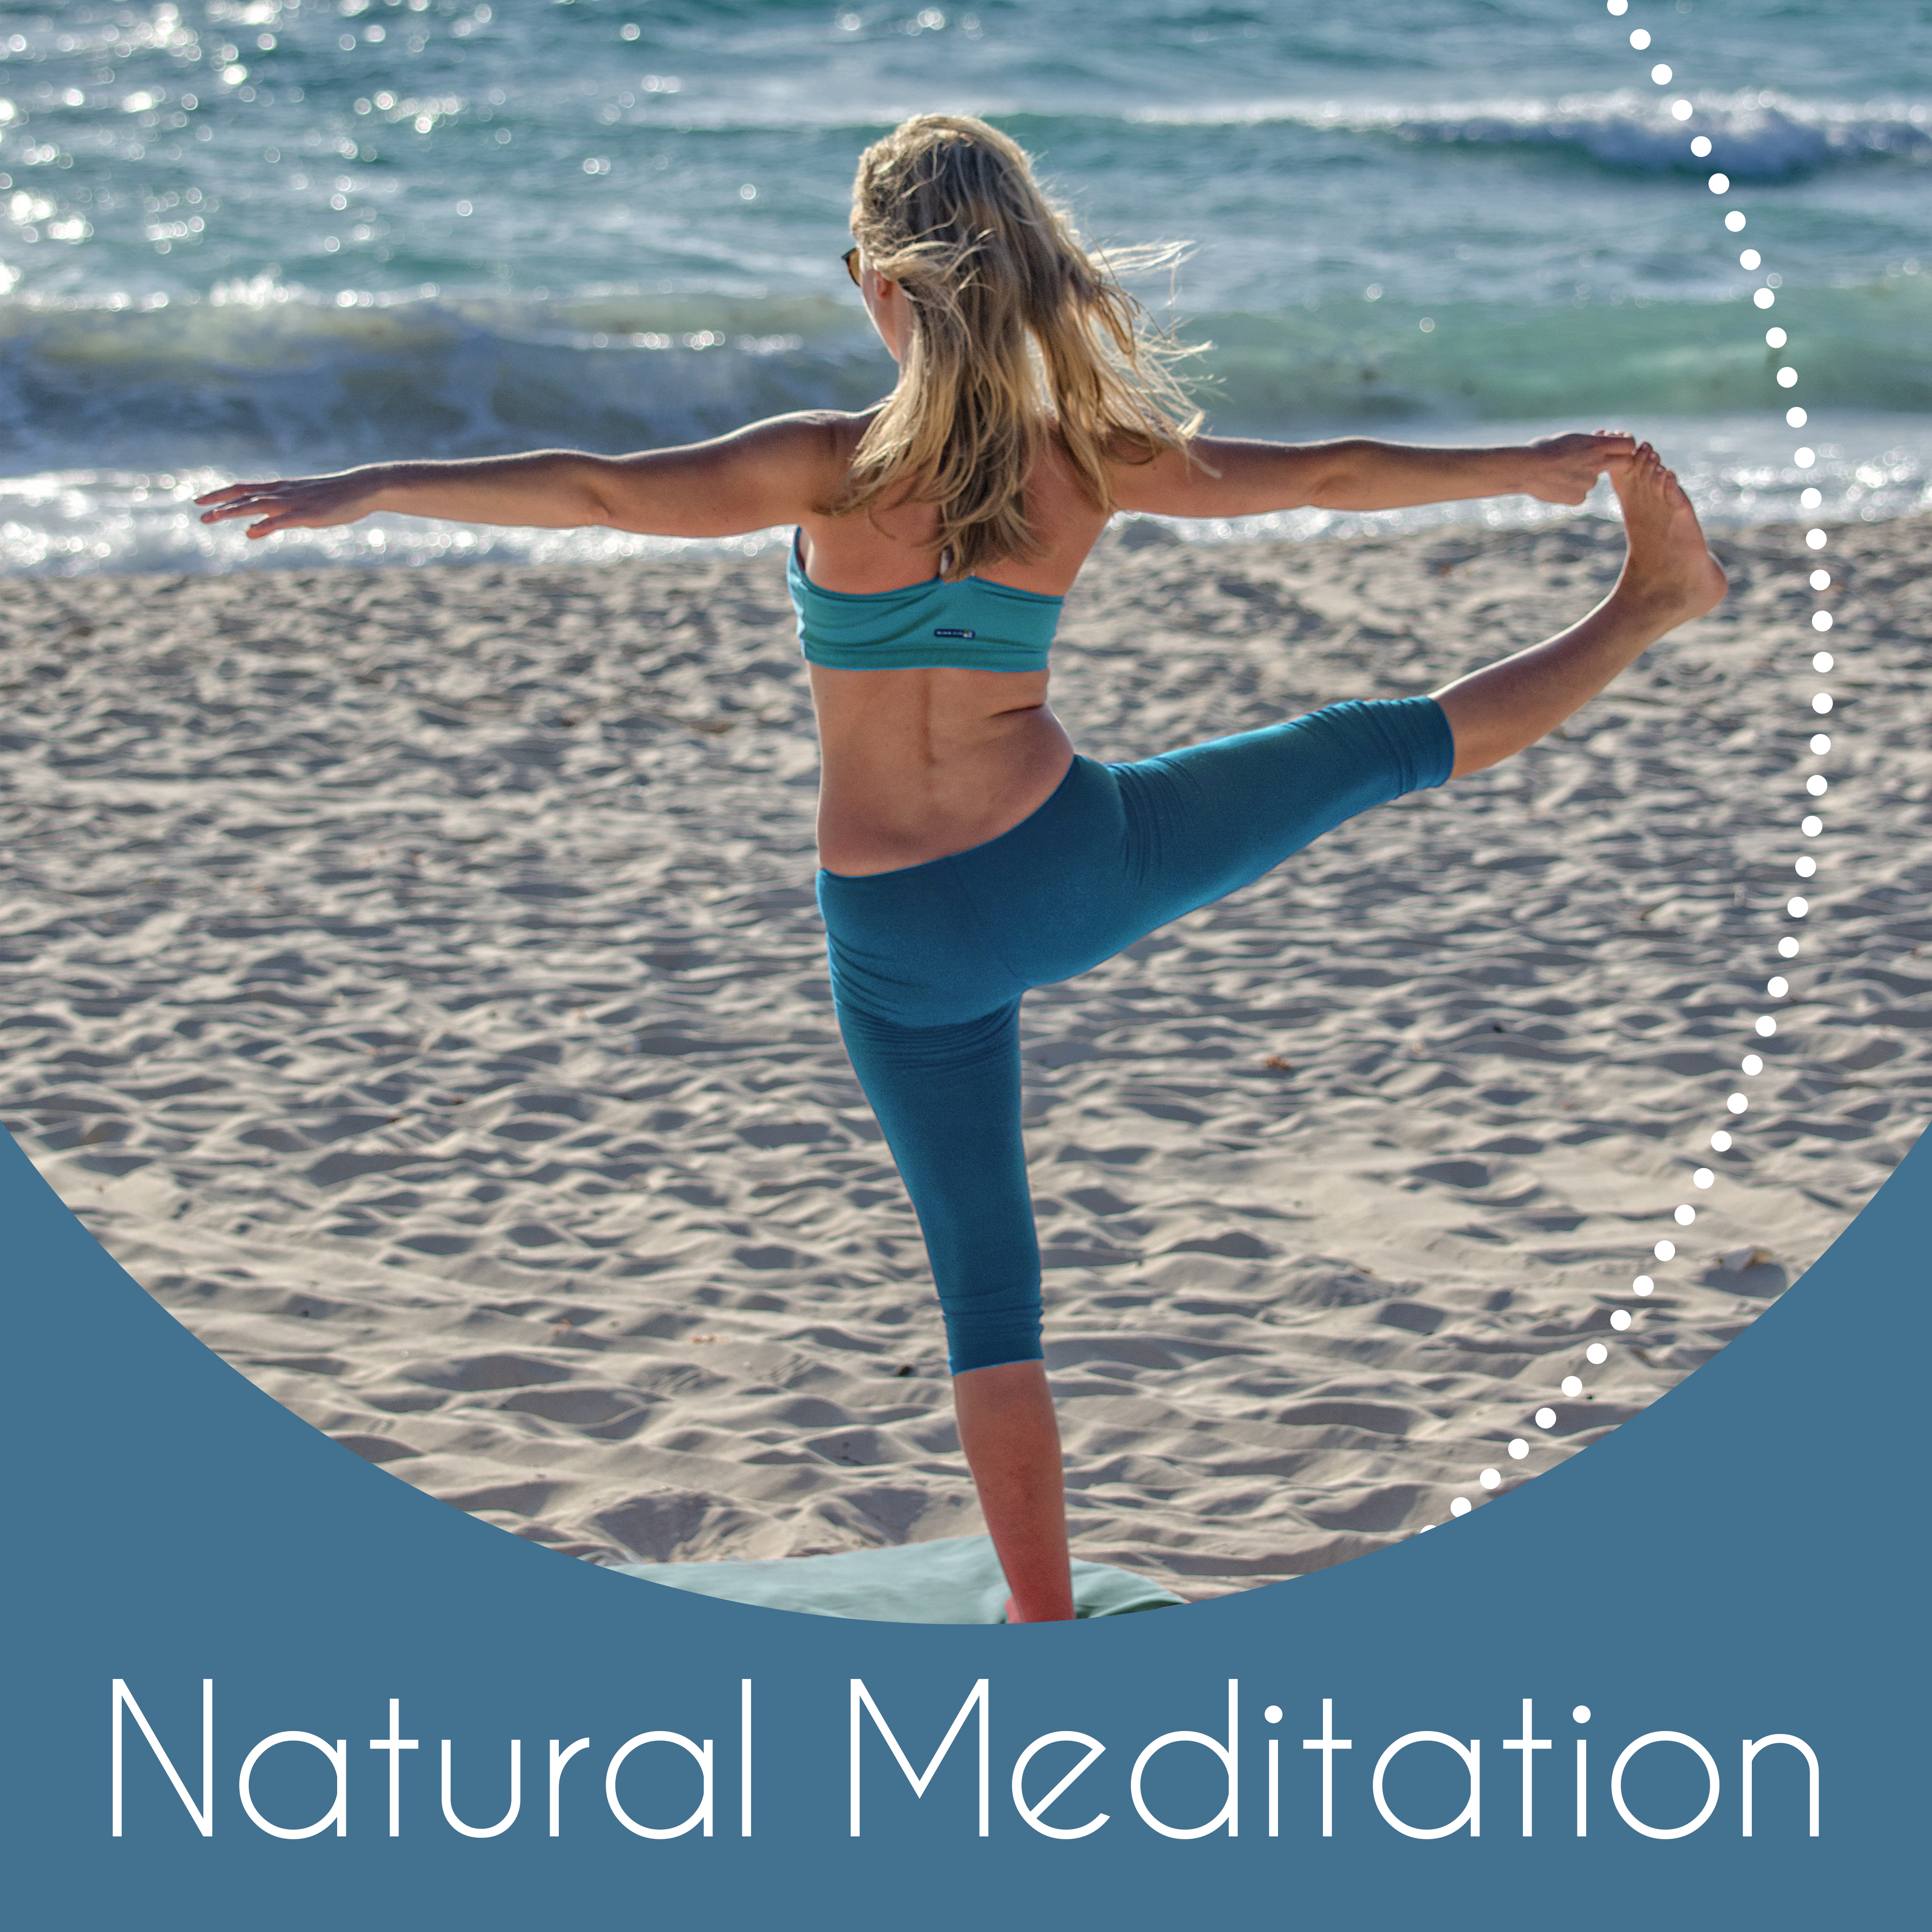 Natural Meditation – Exercise Your Mind, Nature Sounds for Better Concentration, Deep Focus, Meditation Music